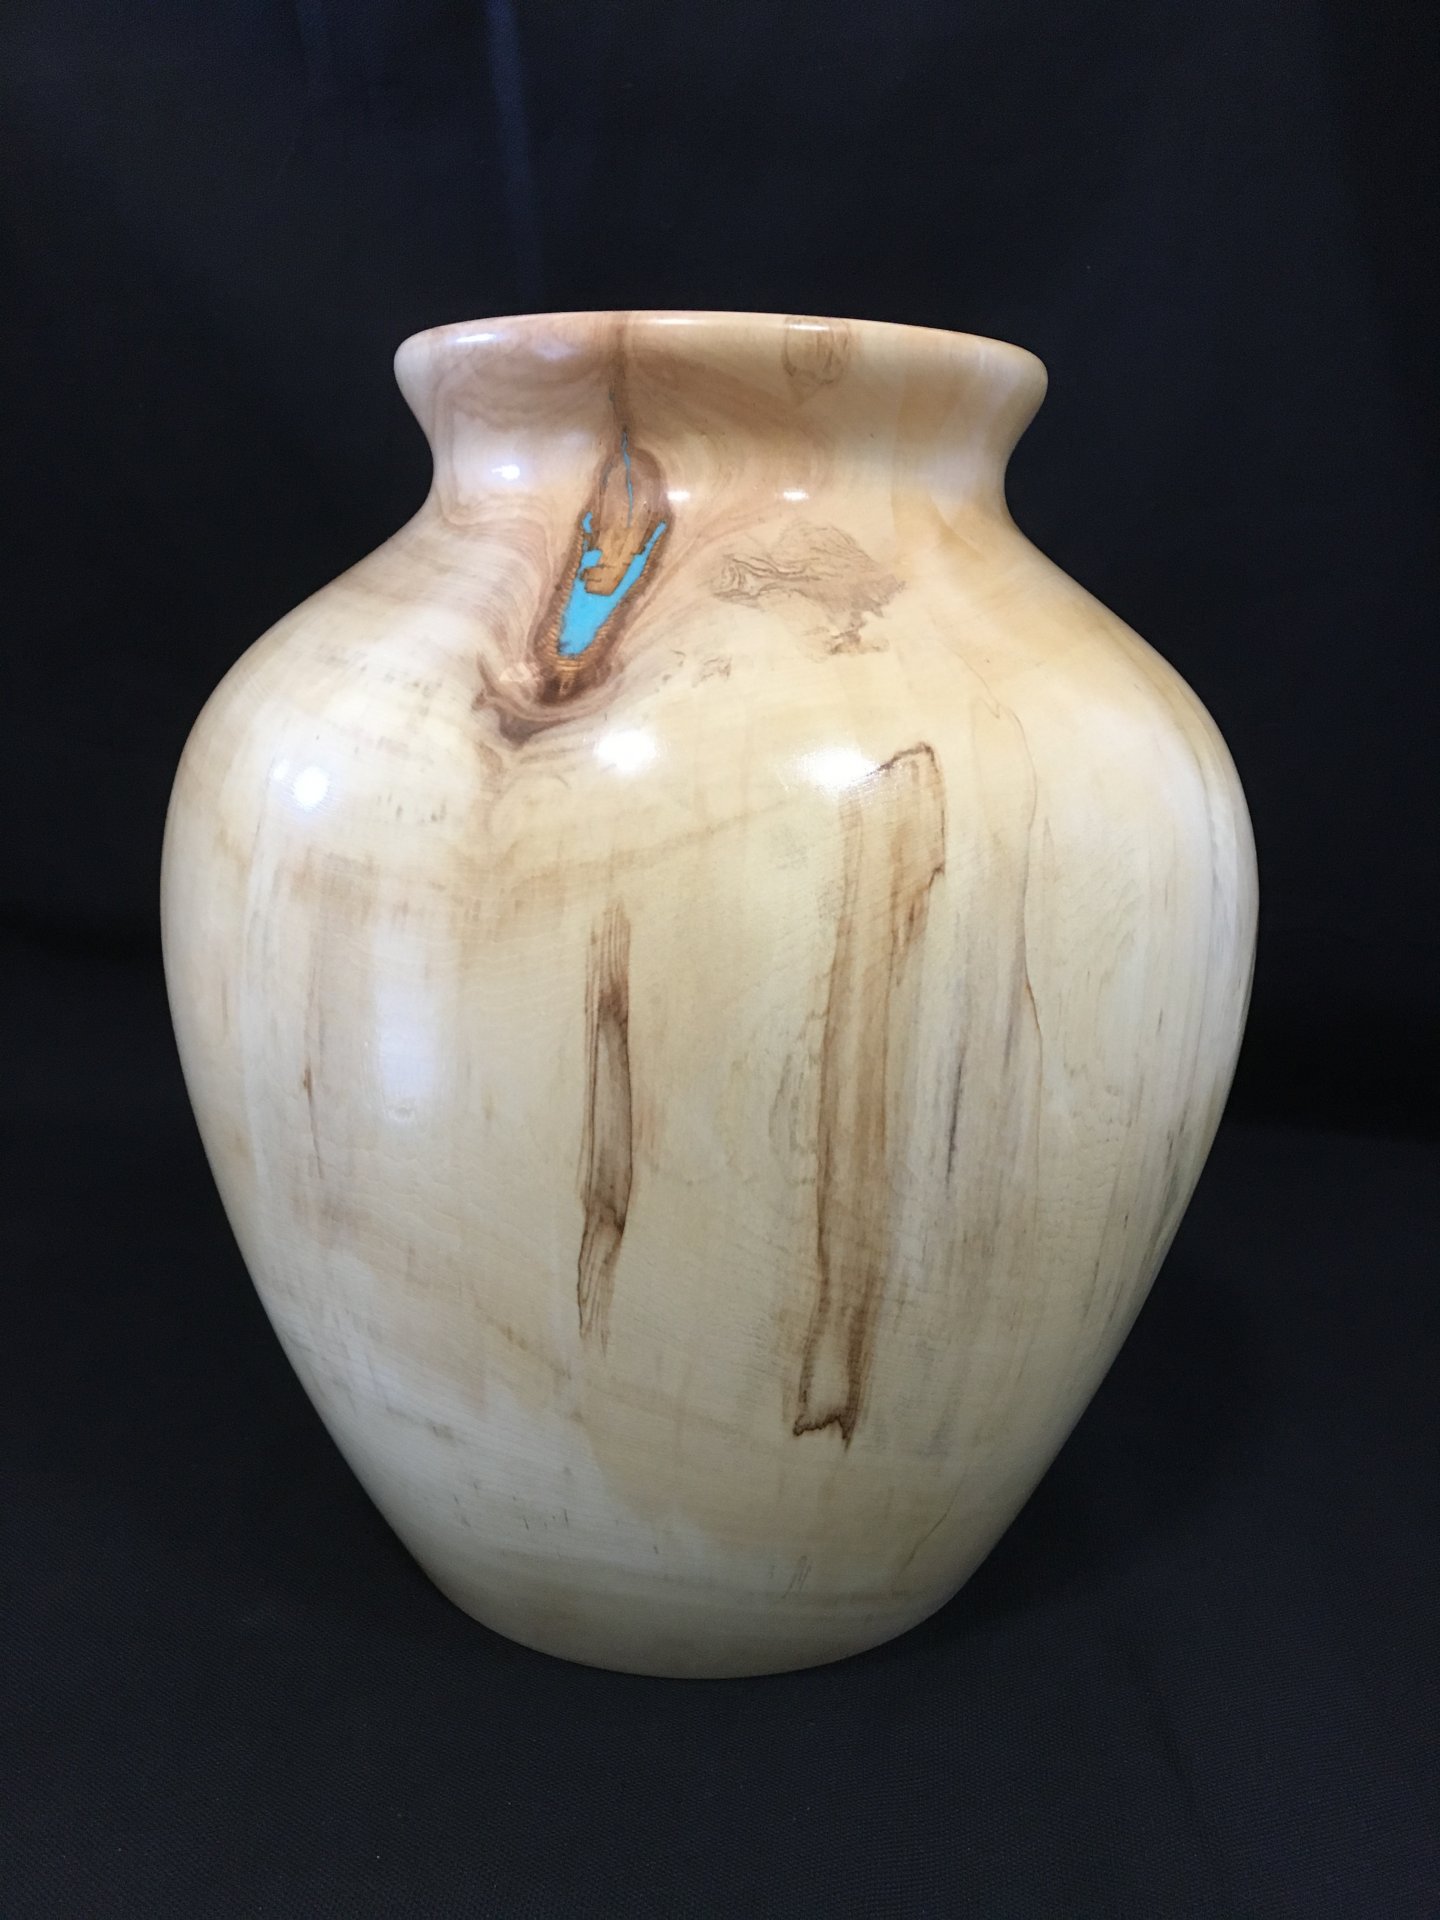 Aspen vase with turquoise